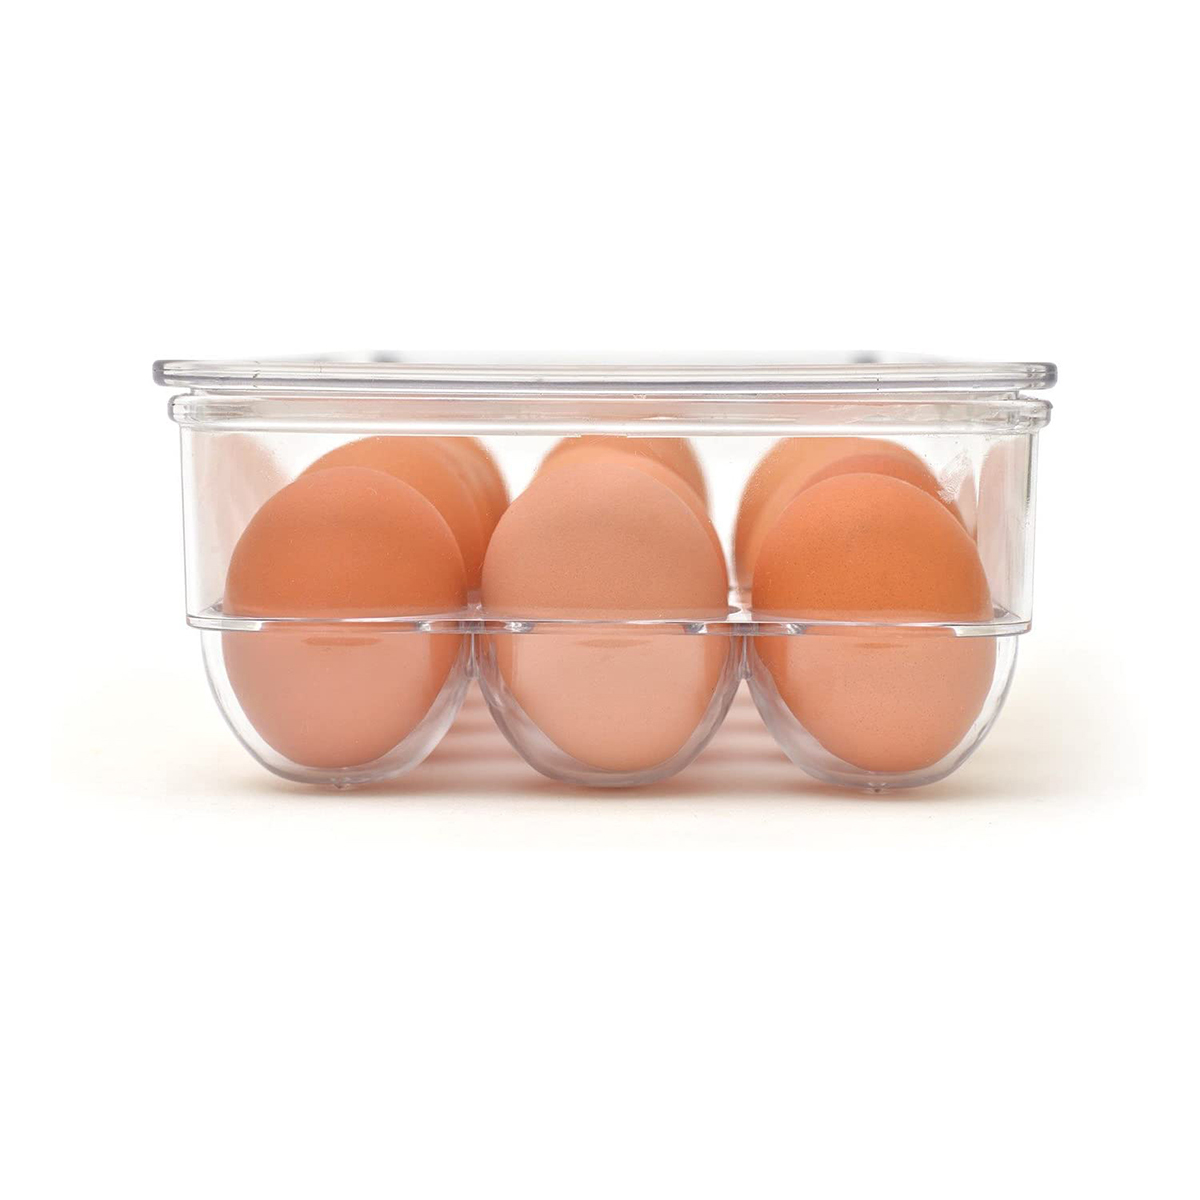 Egg Storage Bins With Lids